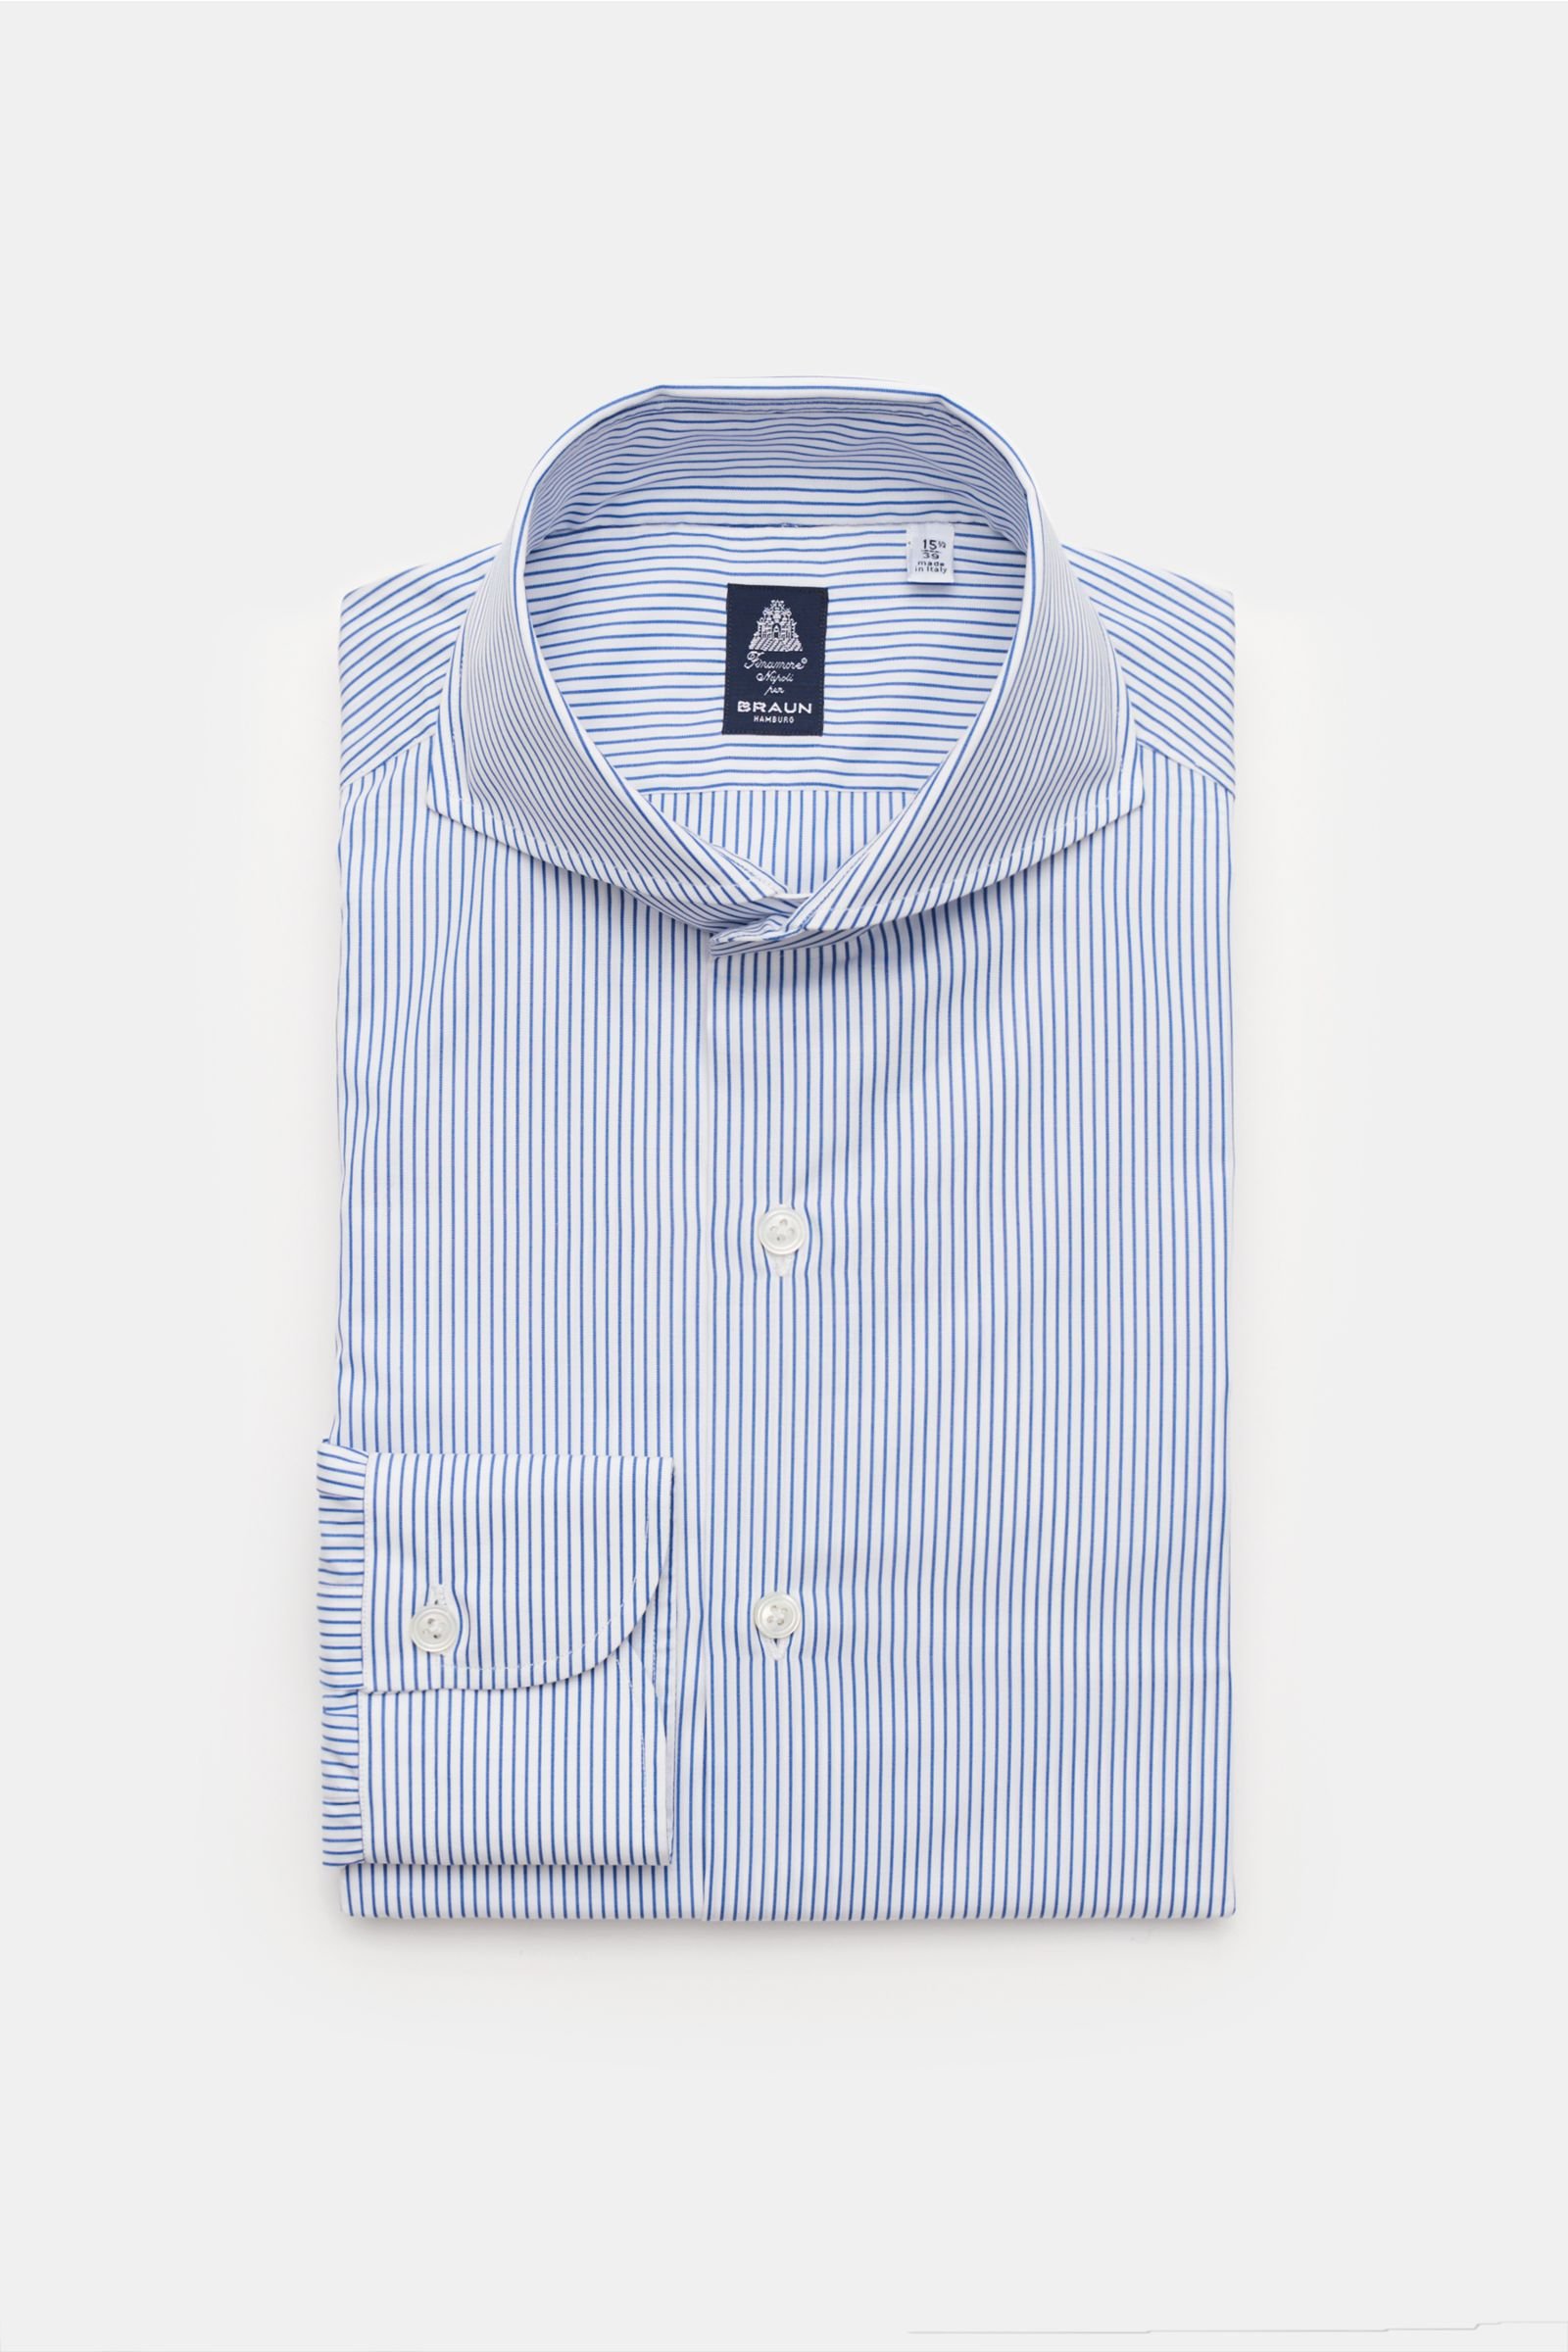 Business shirt 'Sergio Napoli' shark collar grey-blue/white striped